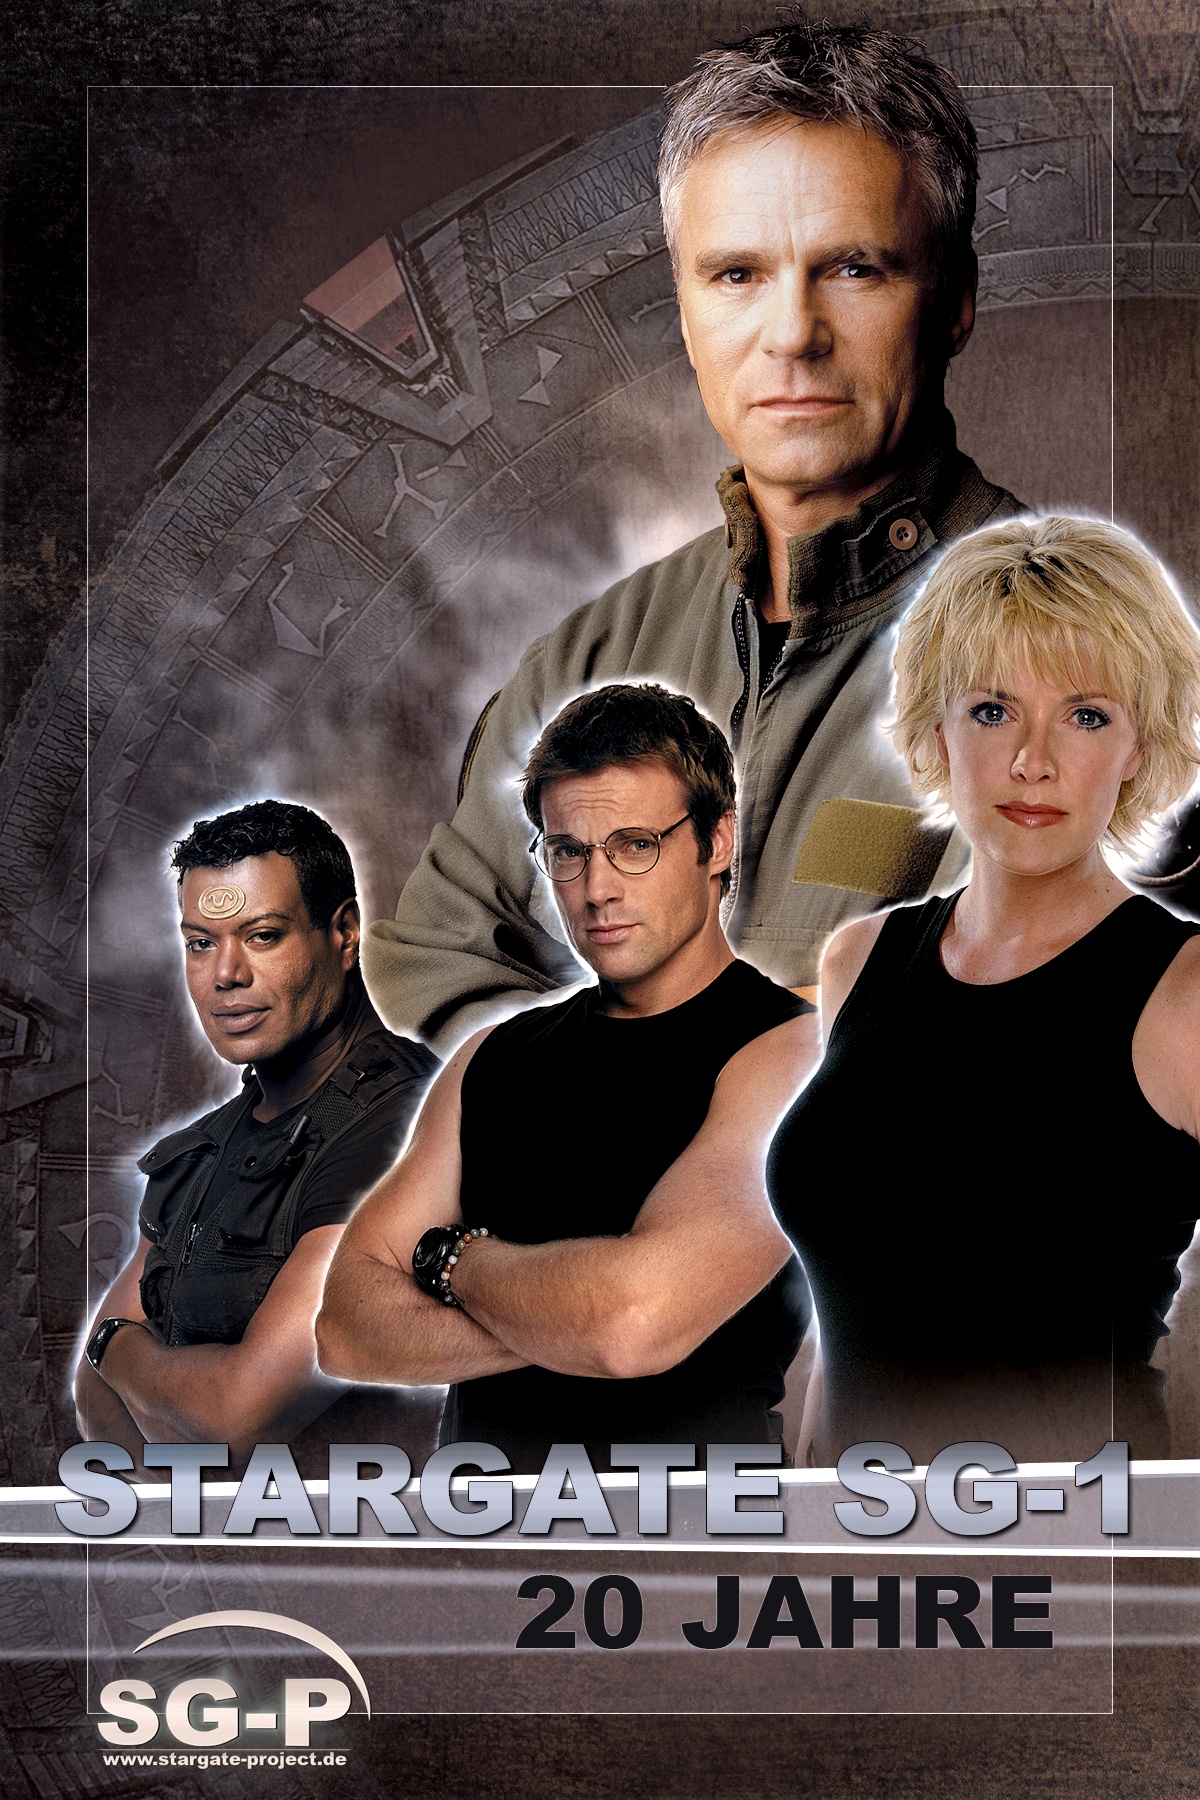 Wallpaper - Stargate SG-1 Jubiläumsposter 20 Jahre - 24.12.2016